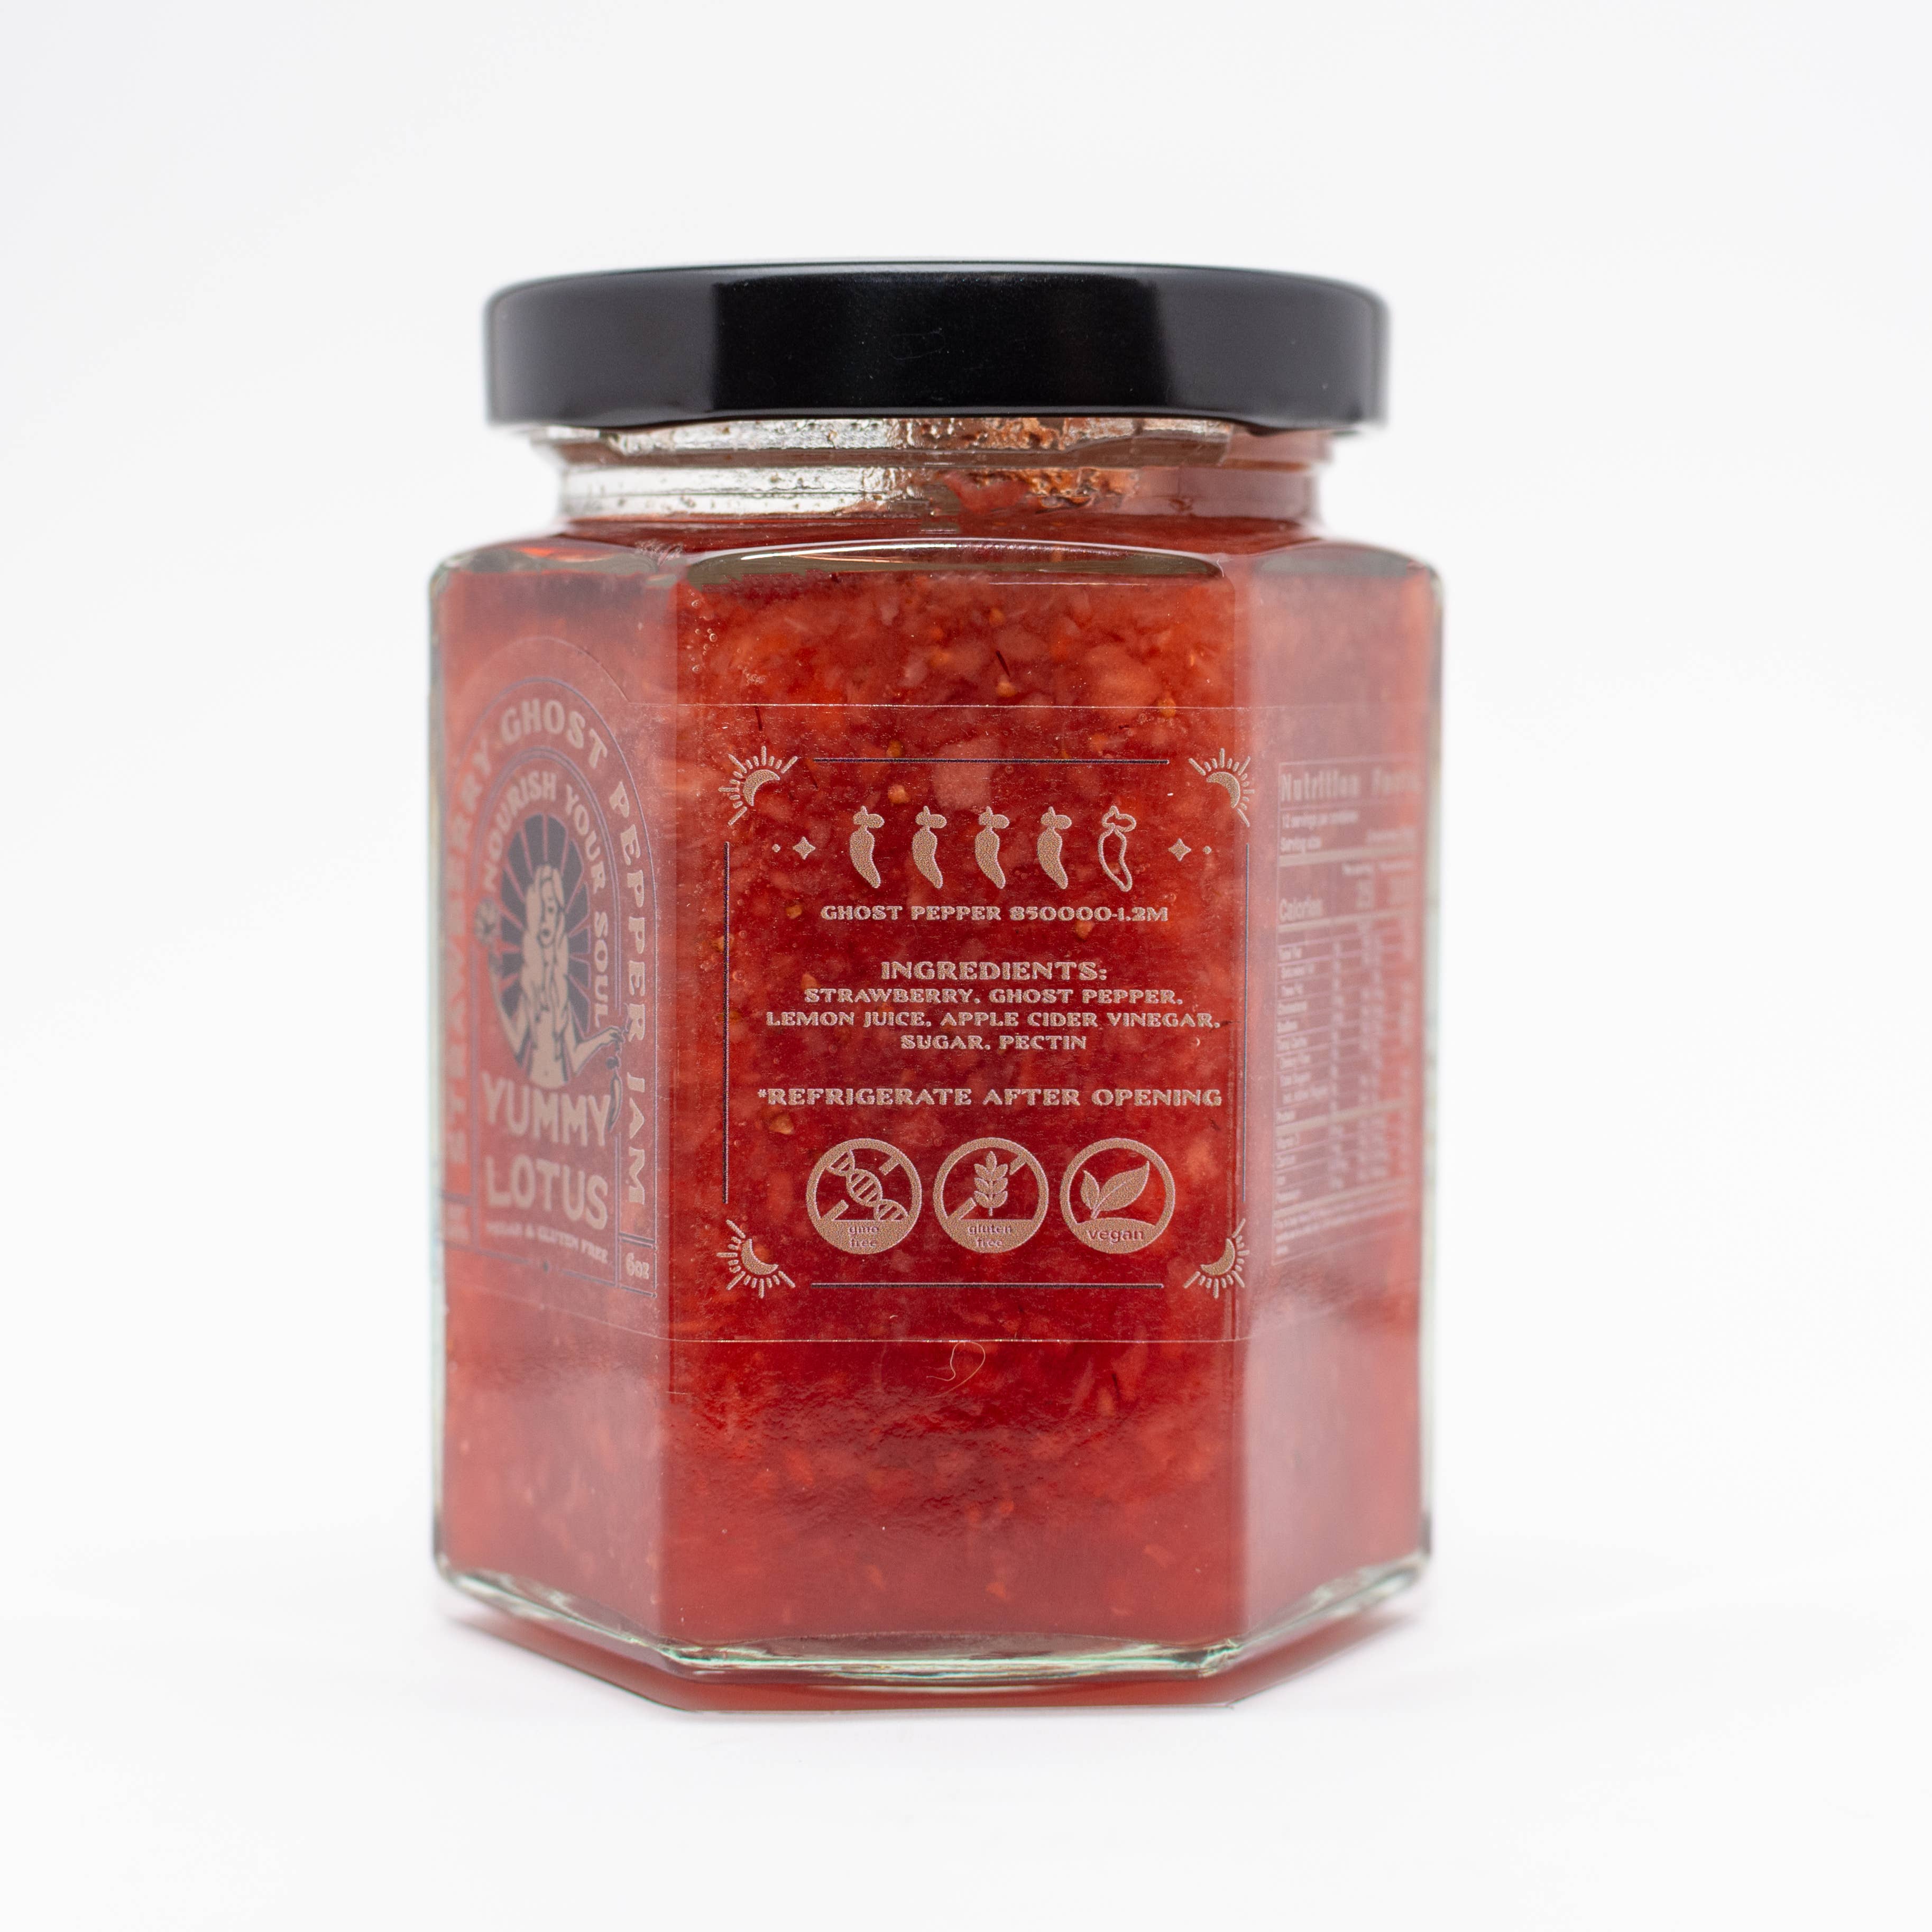 Yummy Lotus Strawberry Ghost Pepper Jam Ingredients